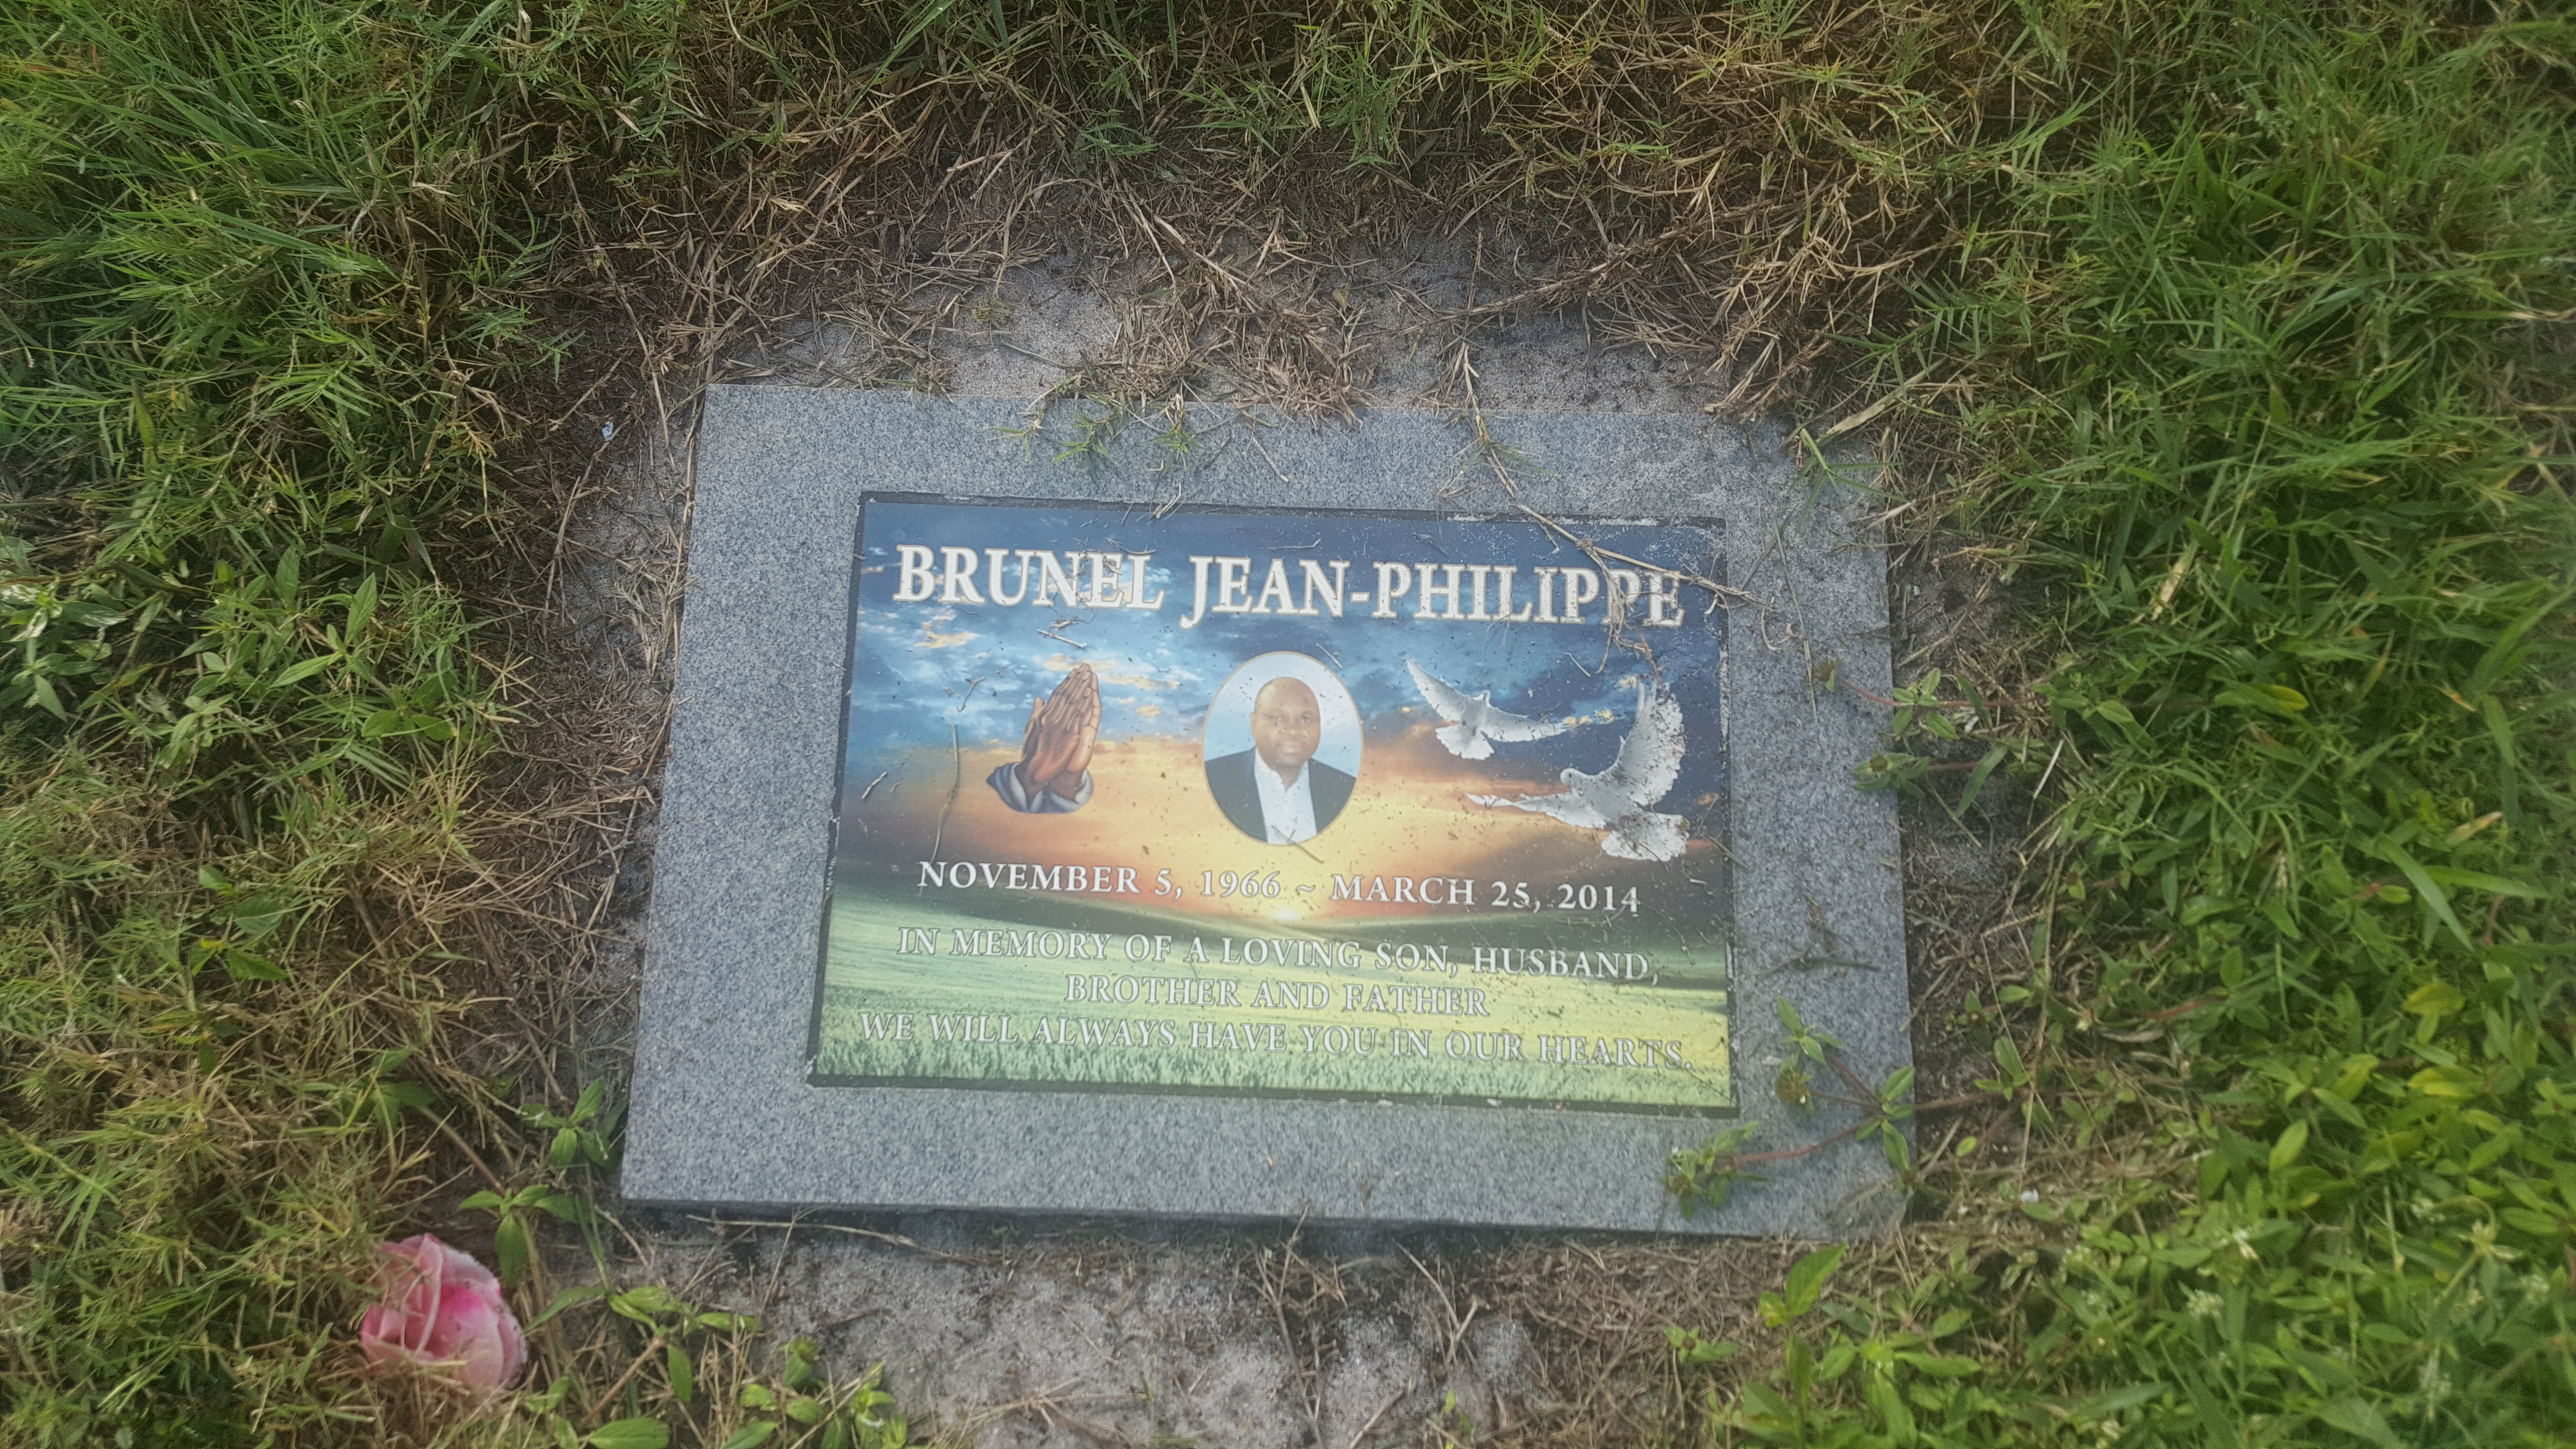 Brunel Jean-Philippe